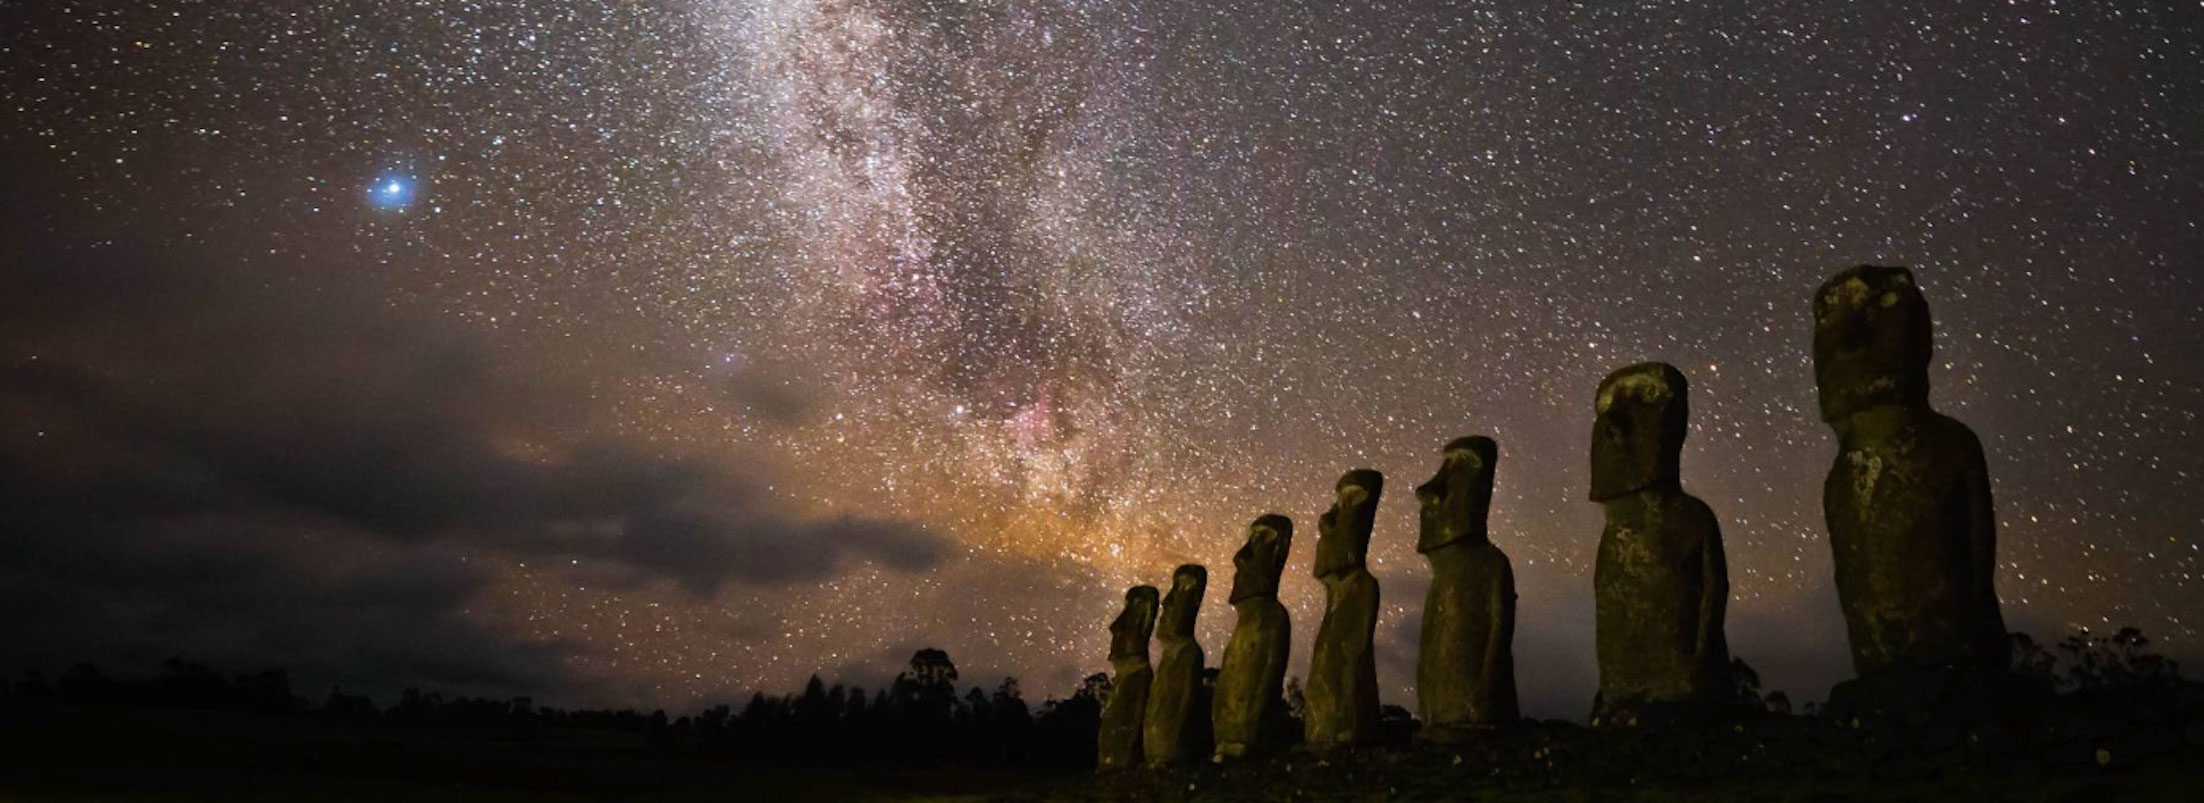 Southern Skies Moai2